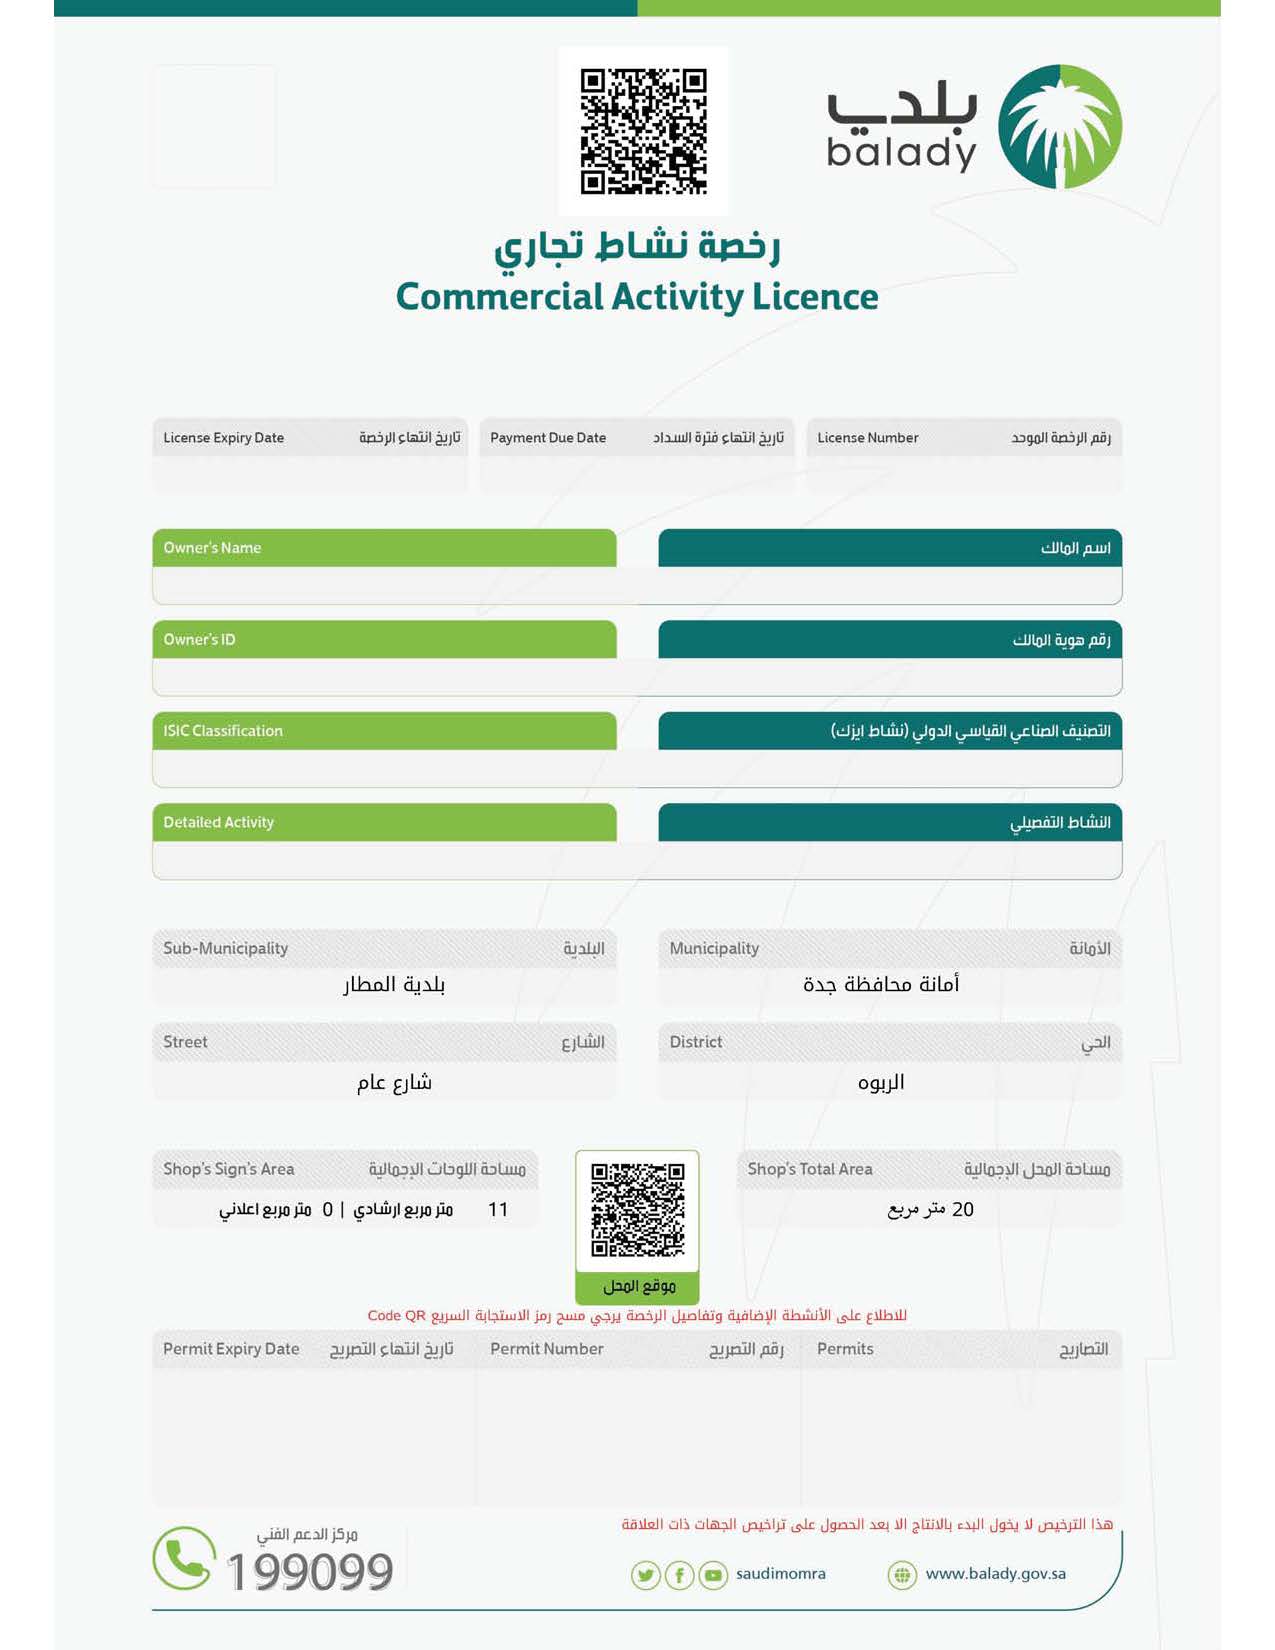 البلديات Page 06 One of the leading companies and a significant number in all its fields